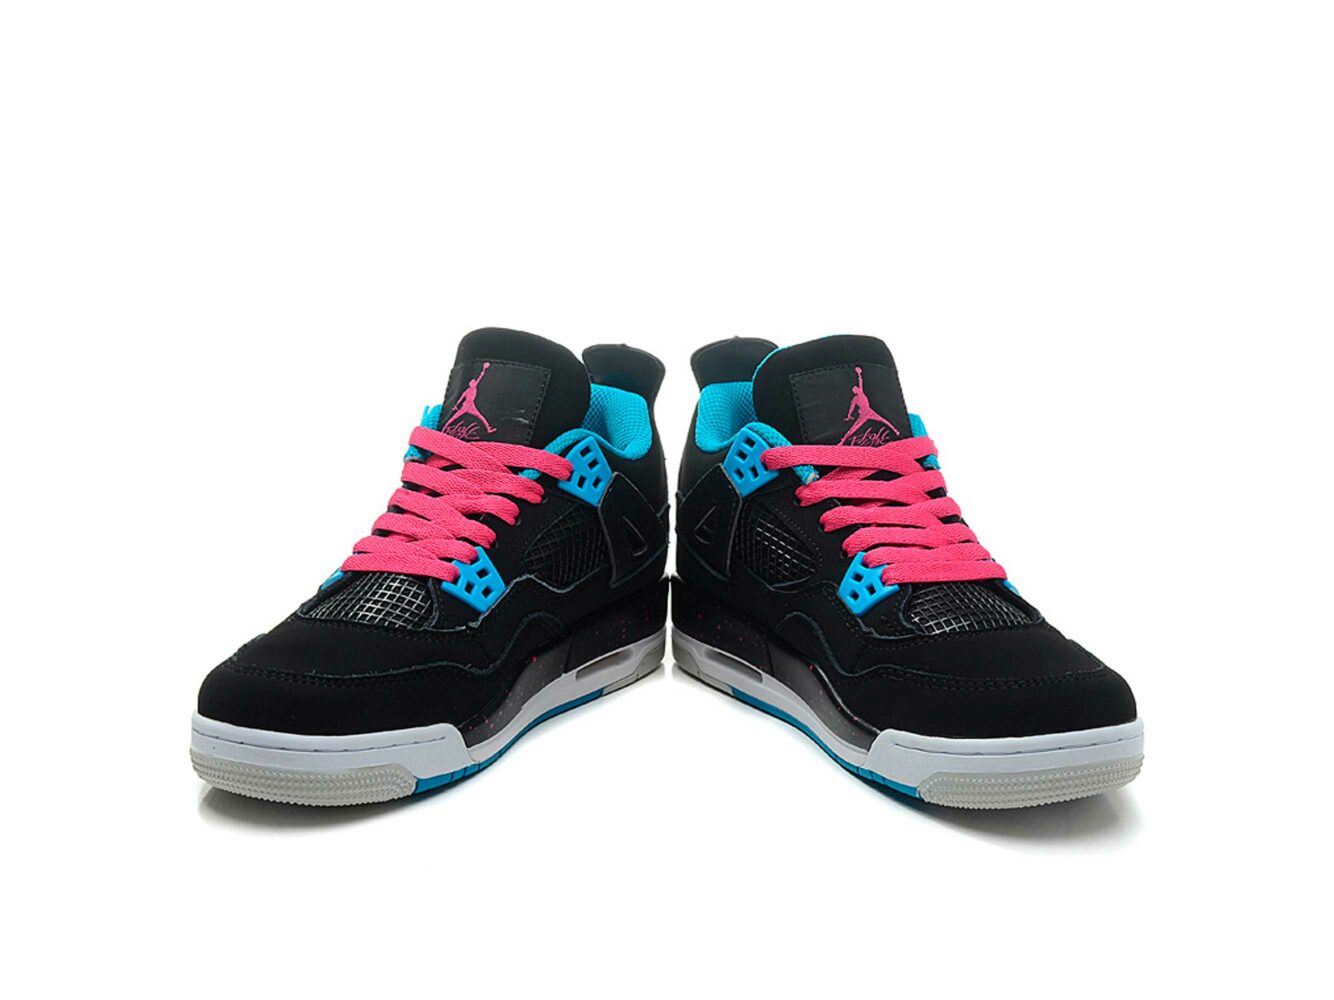 nike air jordan 4 retro black dynamic blue pink 487724-019 интернет магазин